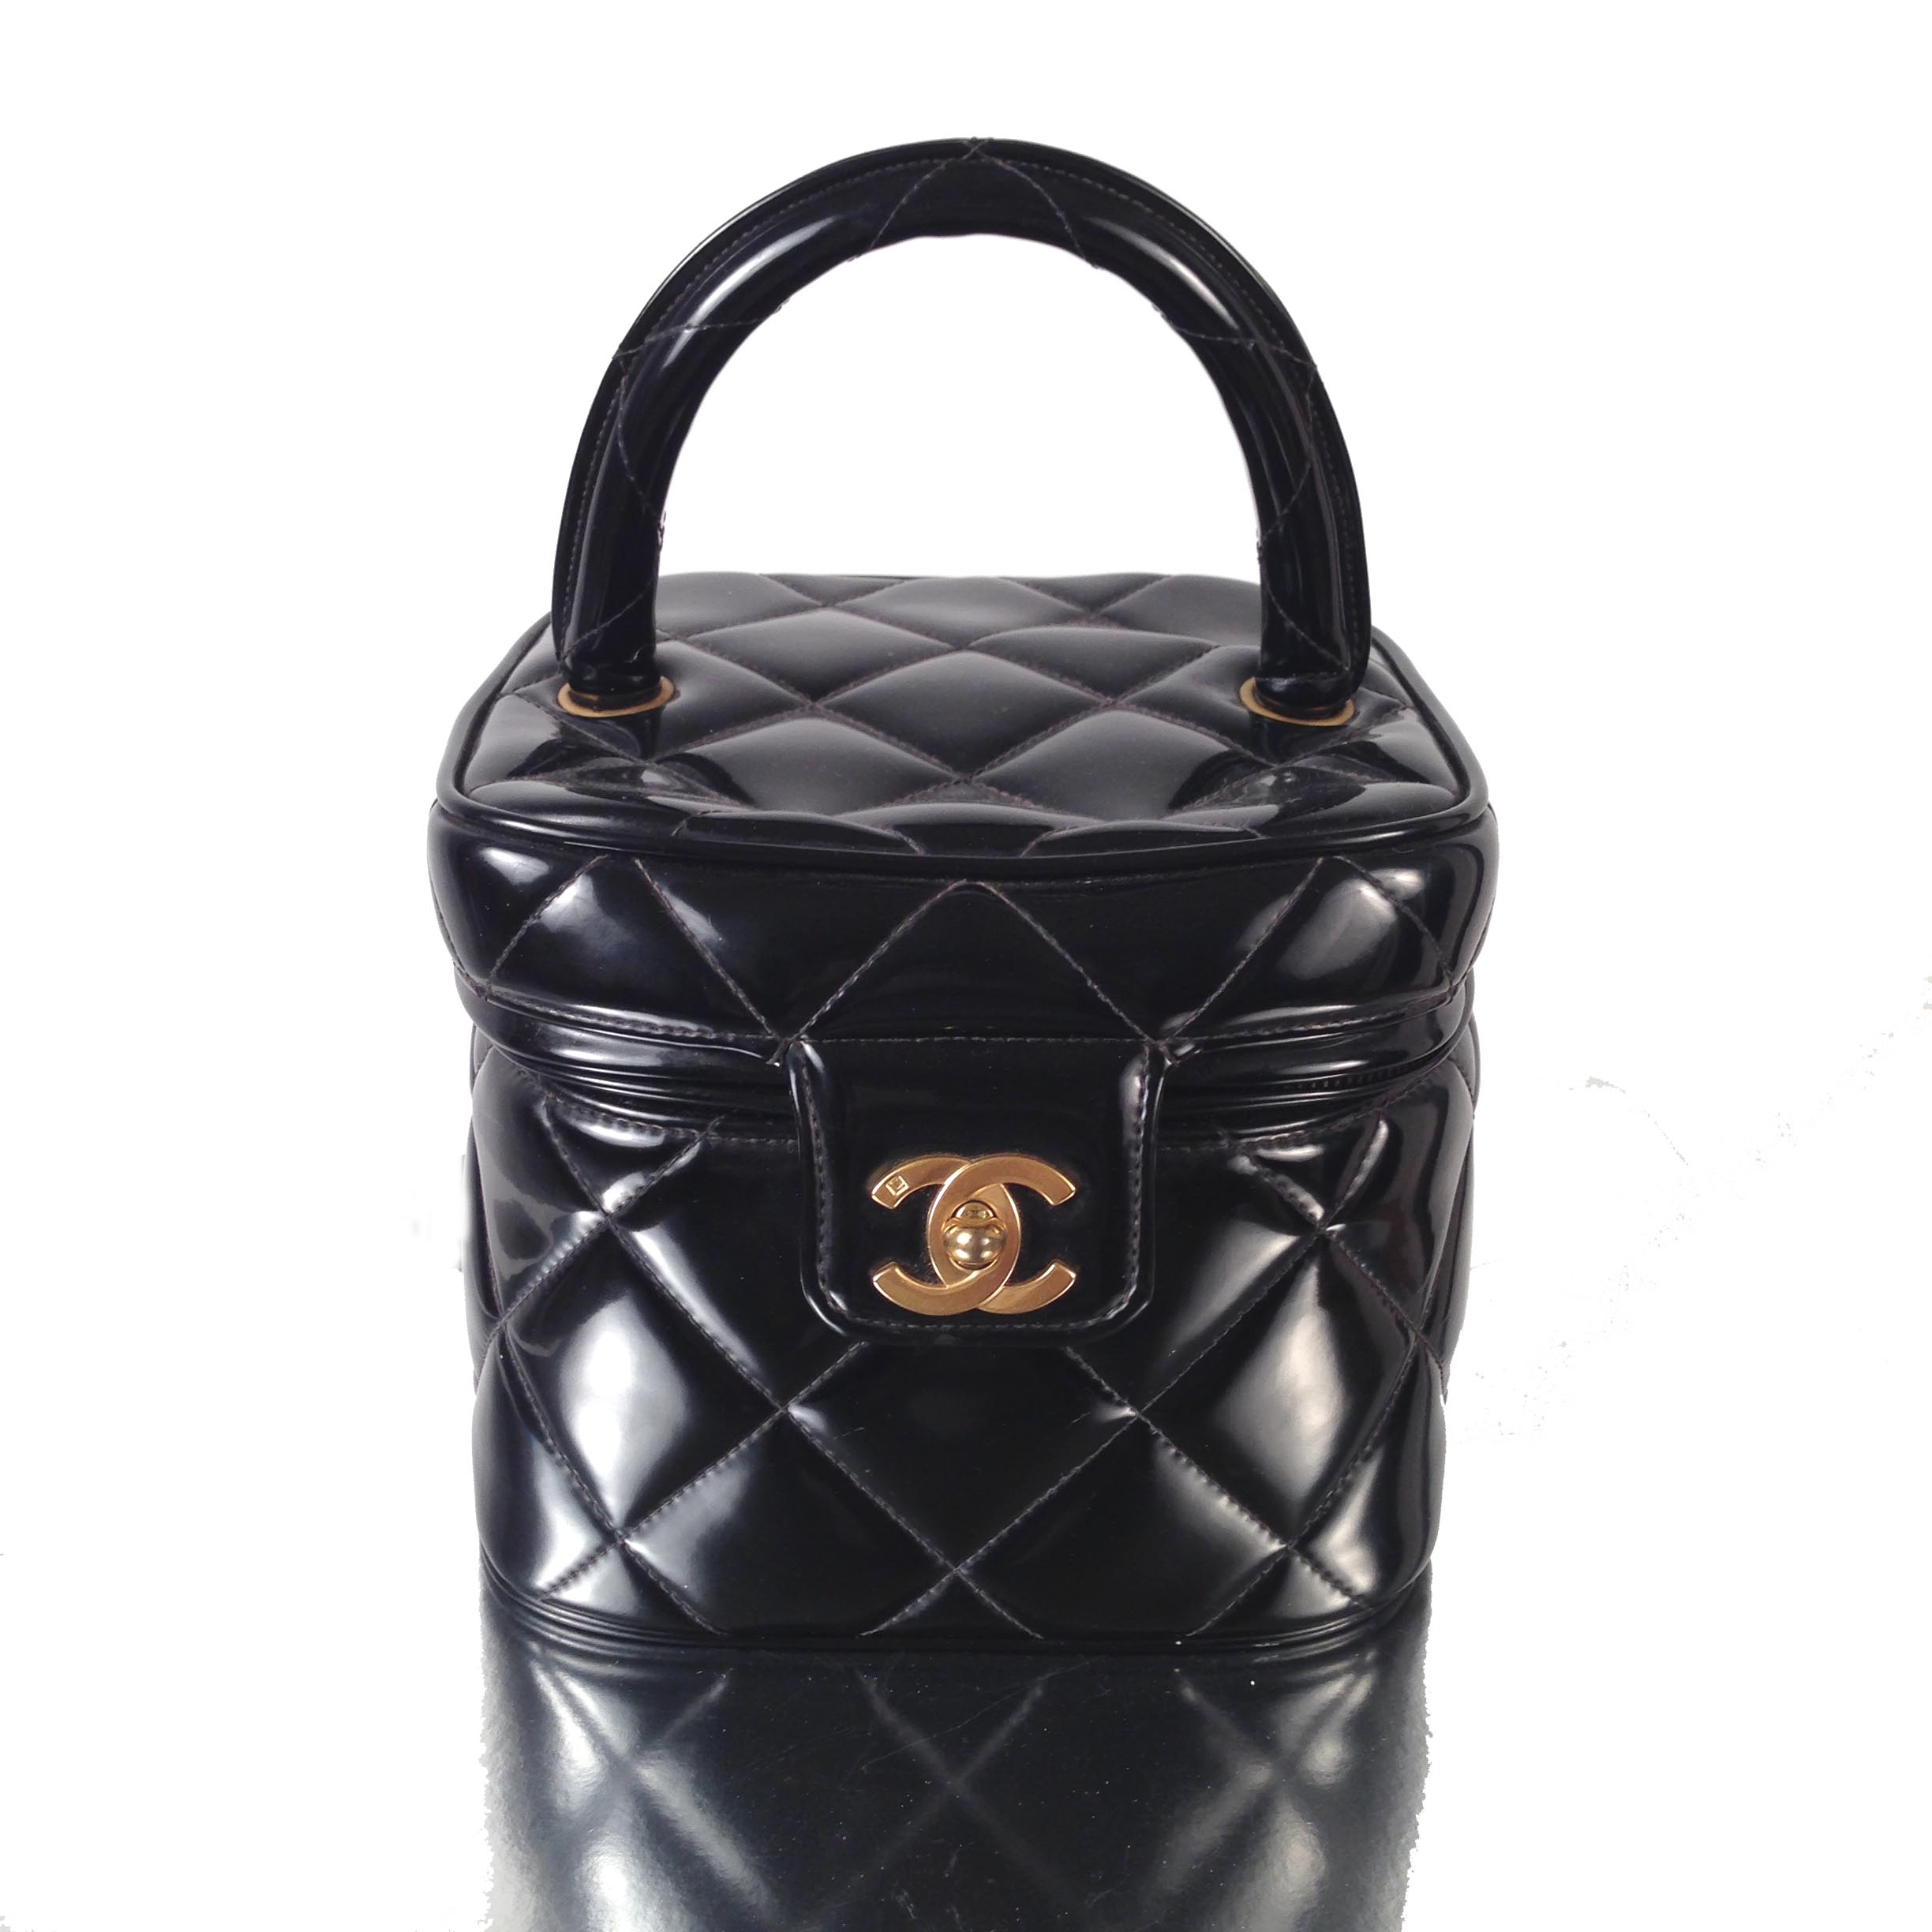 Vintage Chanel Black Patented Leather Handbag Purse Cosmetic Case